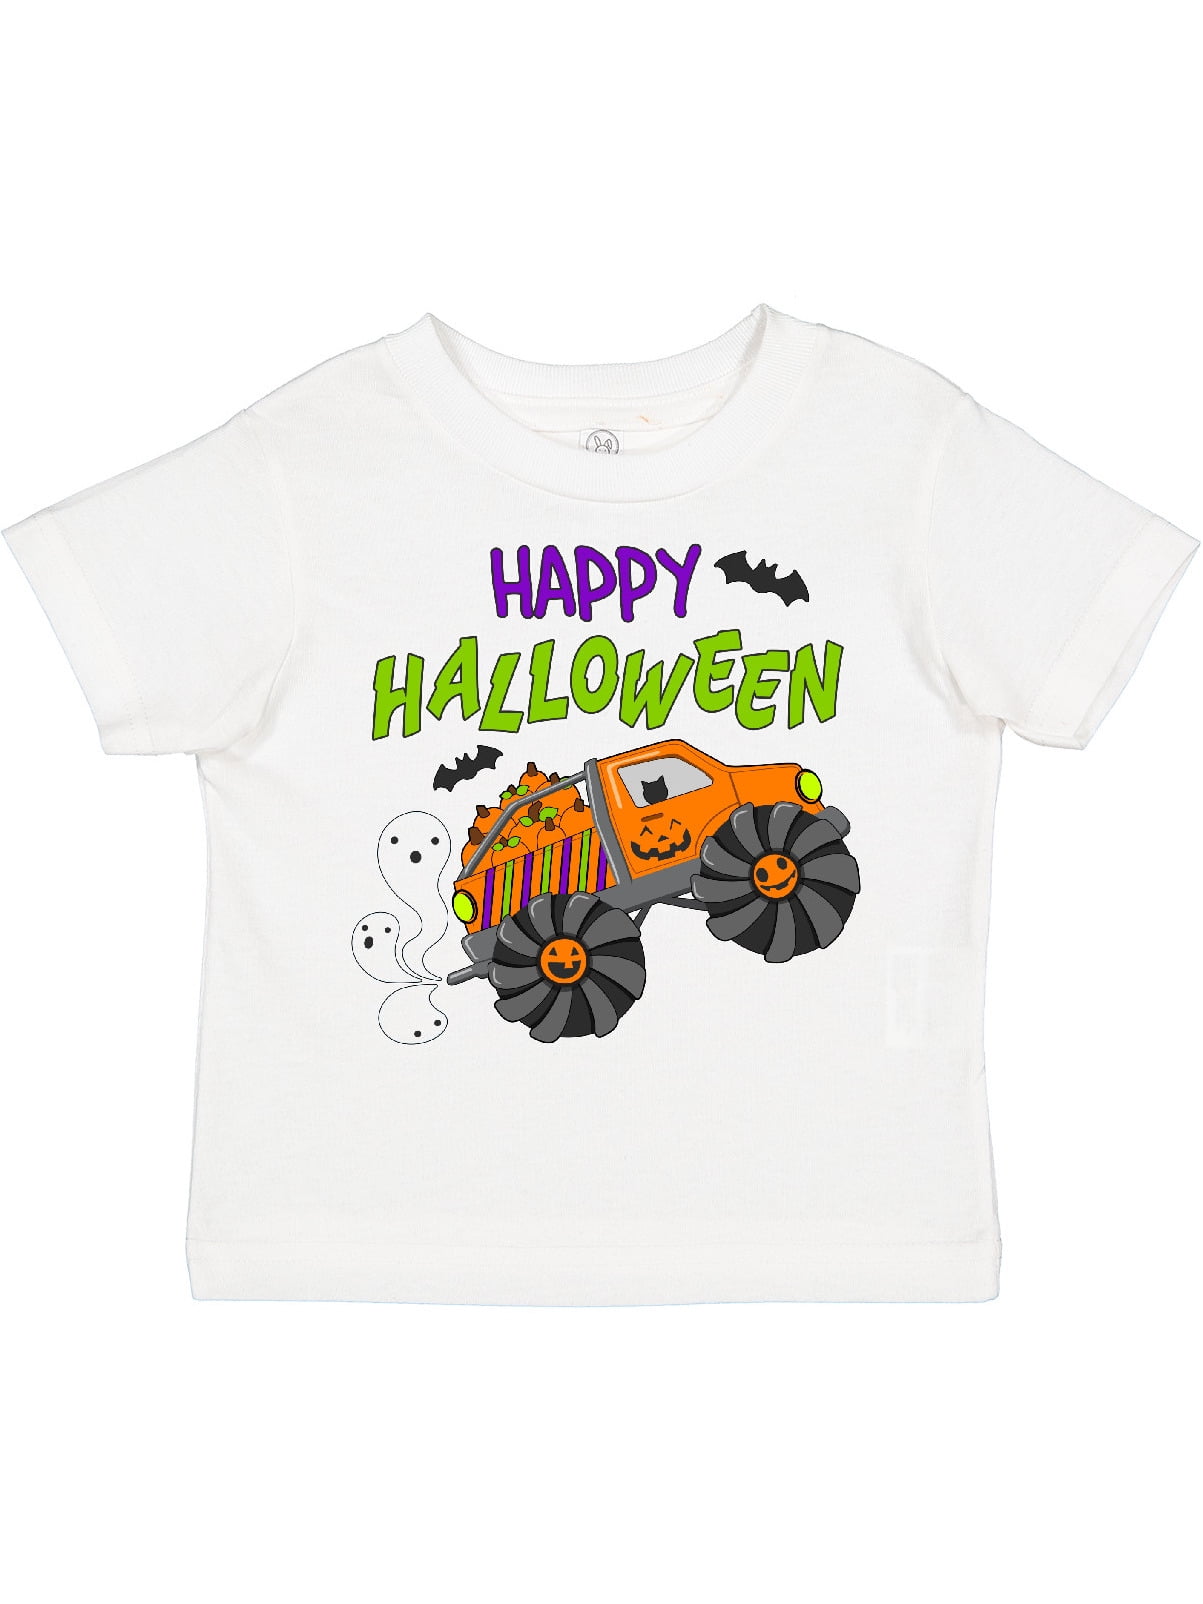 TB Graphic Tee Toddler Boys Halloween T-Shirts Bat Pumpkin Ghosts New 